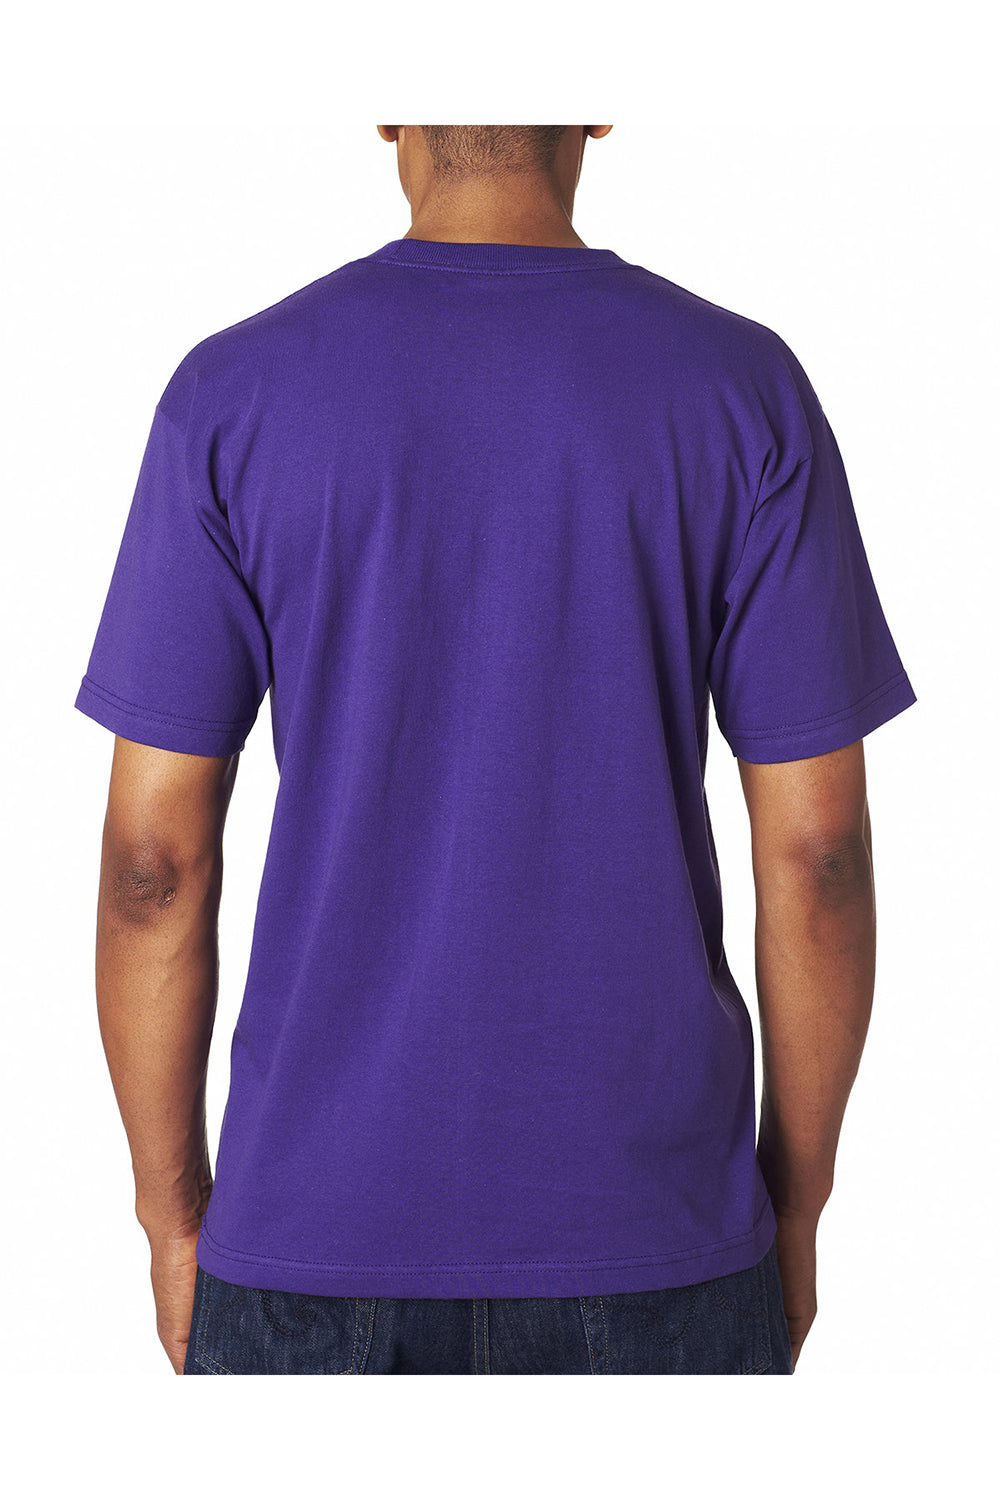 Bayside BA5100 Mens USA Made Short Sleeve Crewneck T-Shirt Purple Model Back